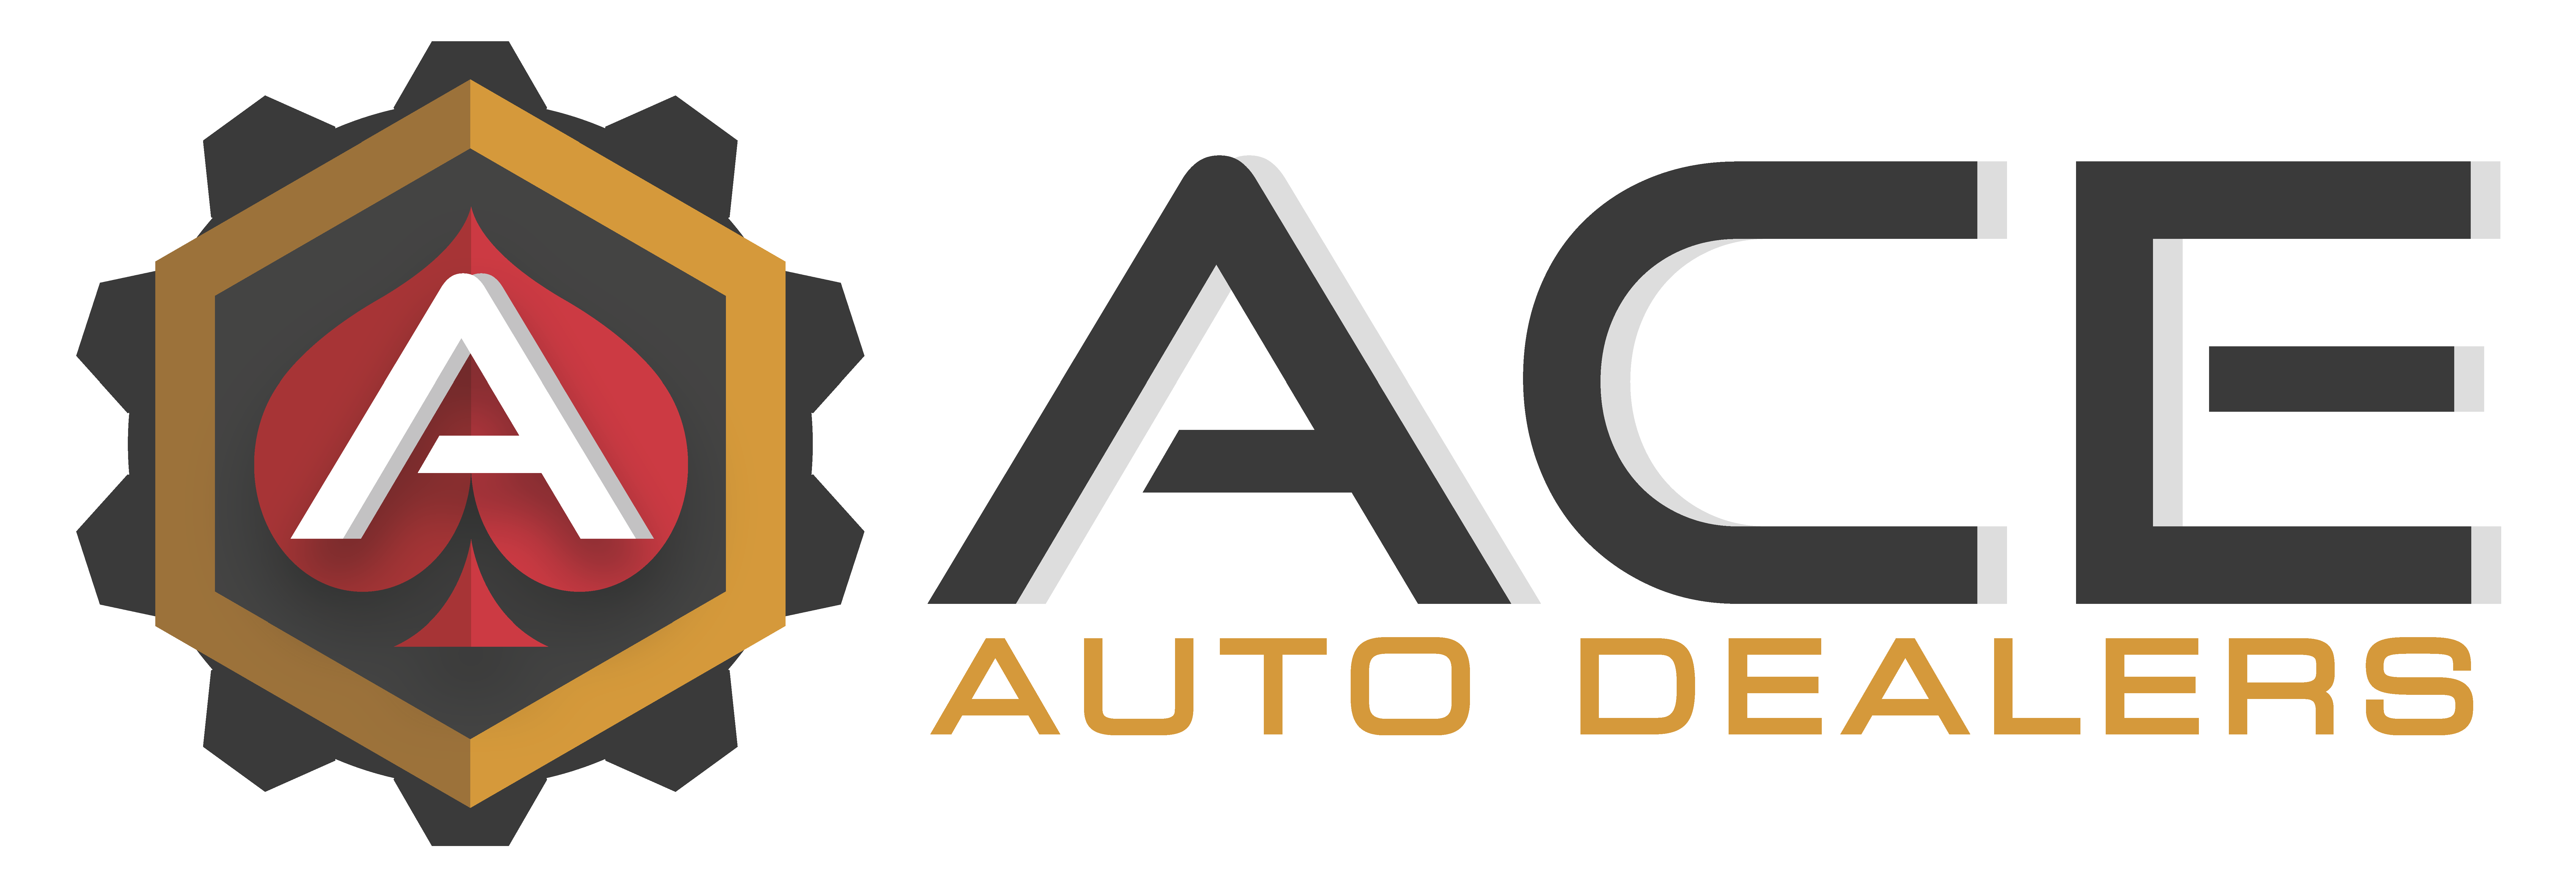 Ace Auto Dealers Corp.